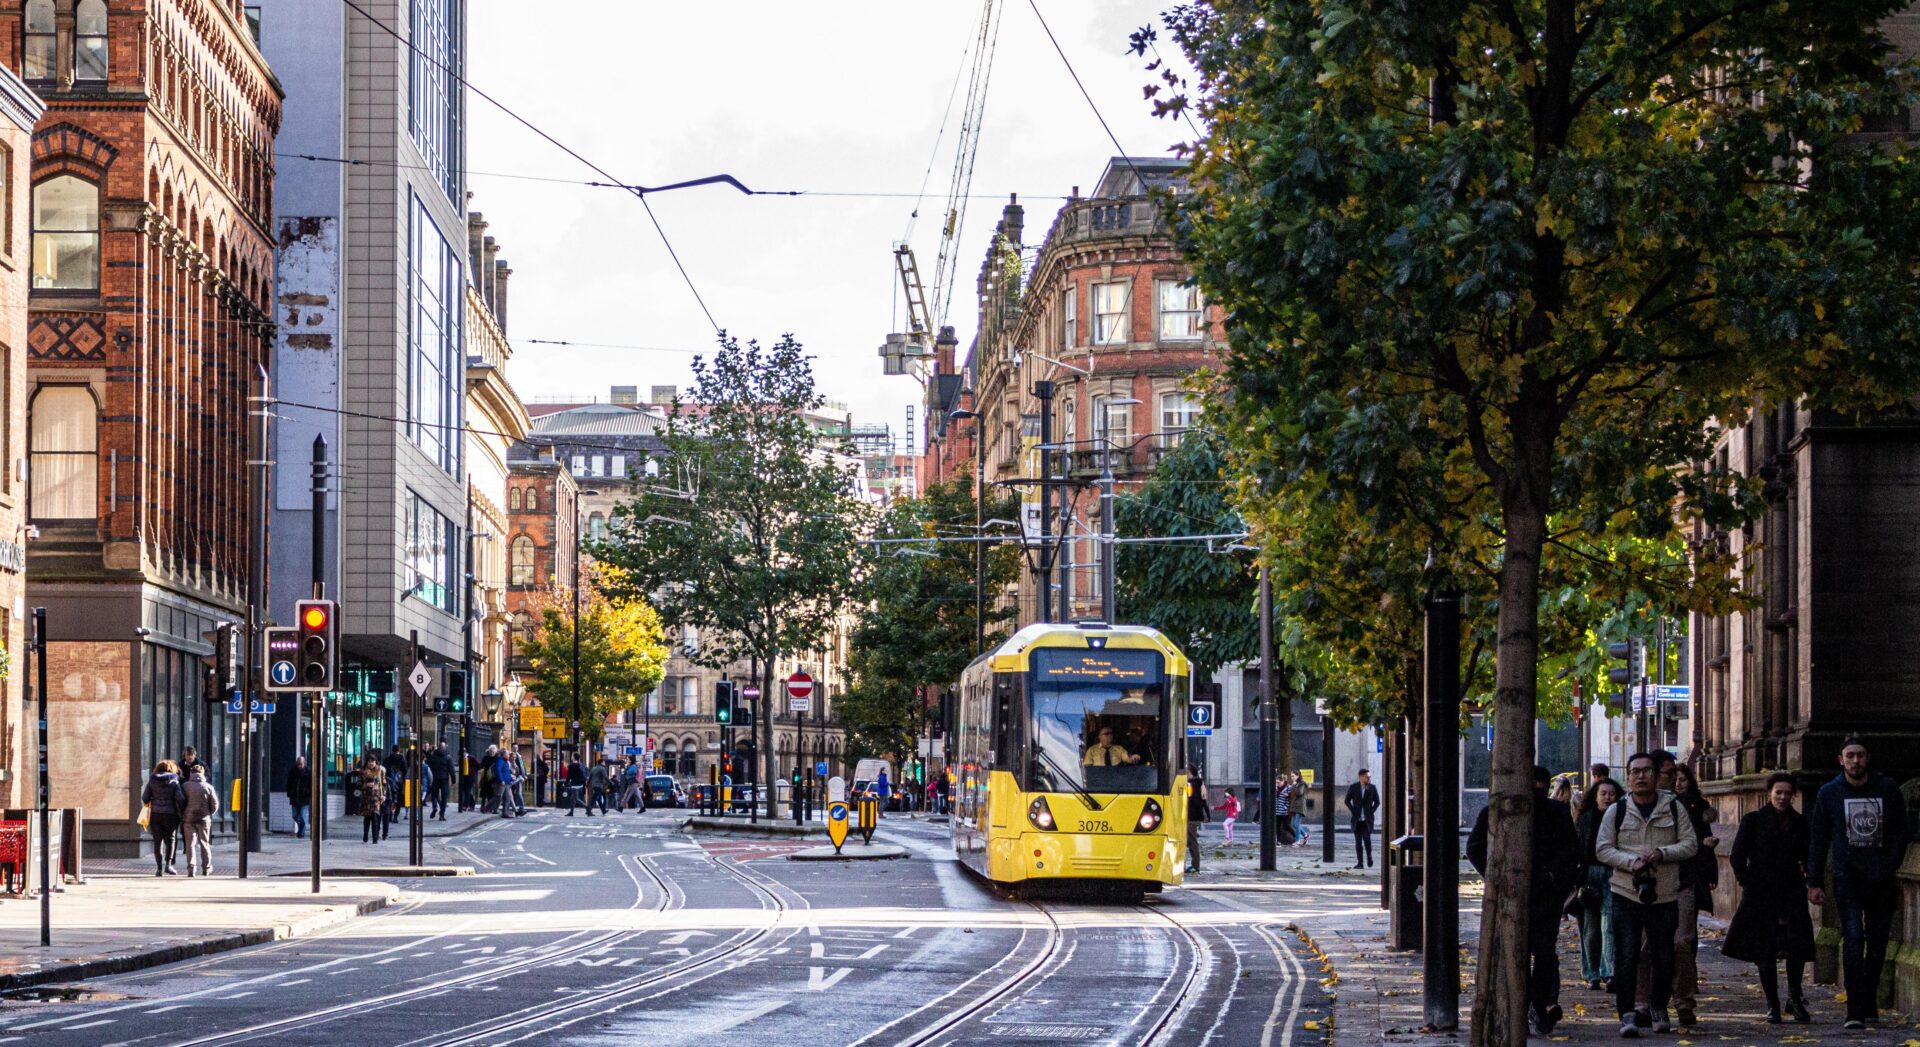 A Metrolink tram in central Manchester